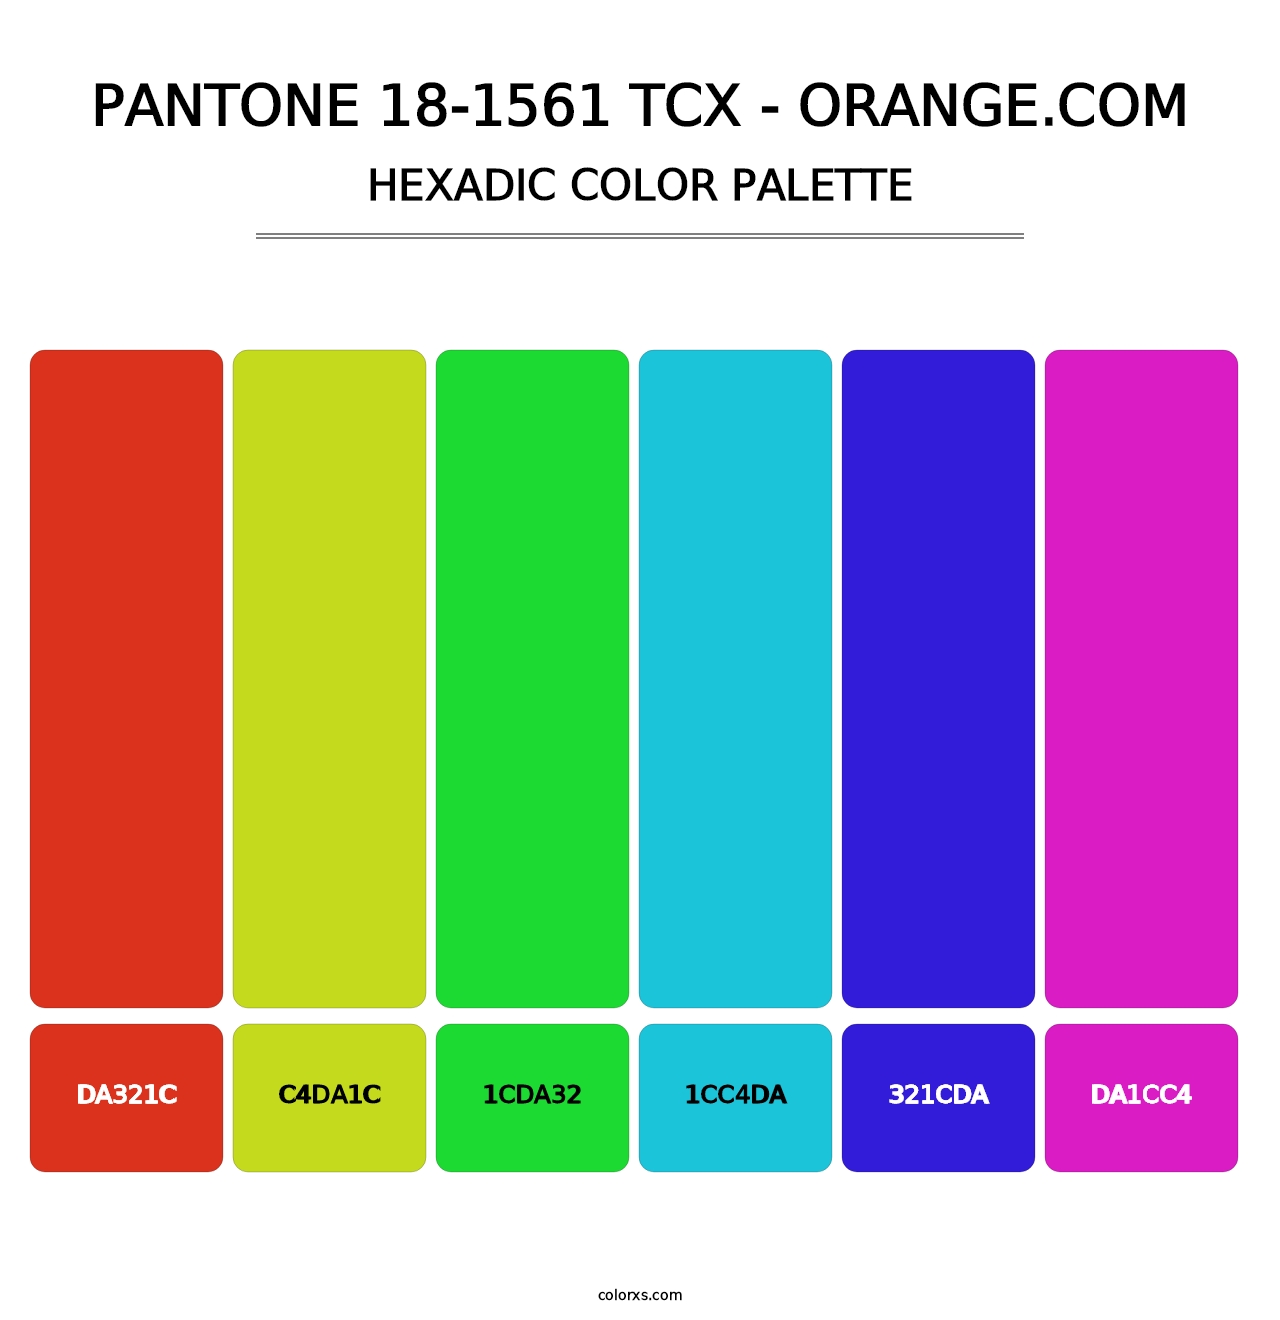 PANTONE 18-1561 TCX - Orange.com - Hexadic Color Palette